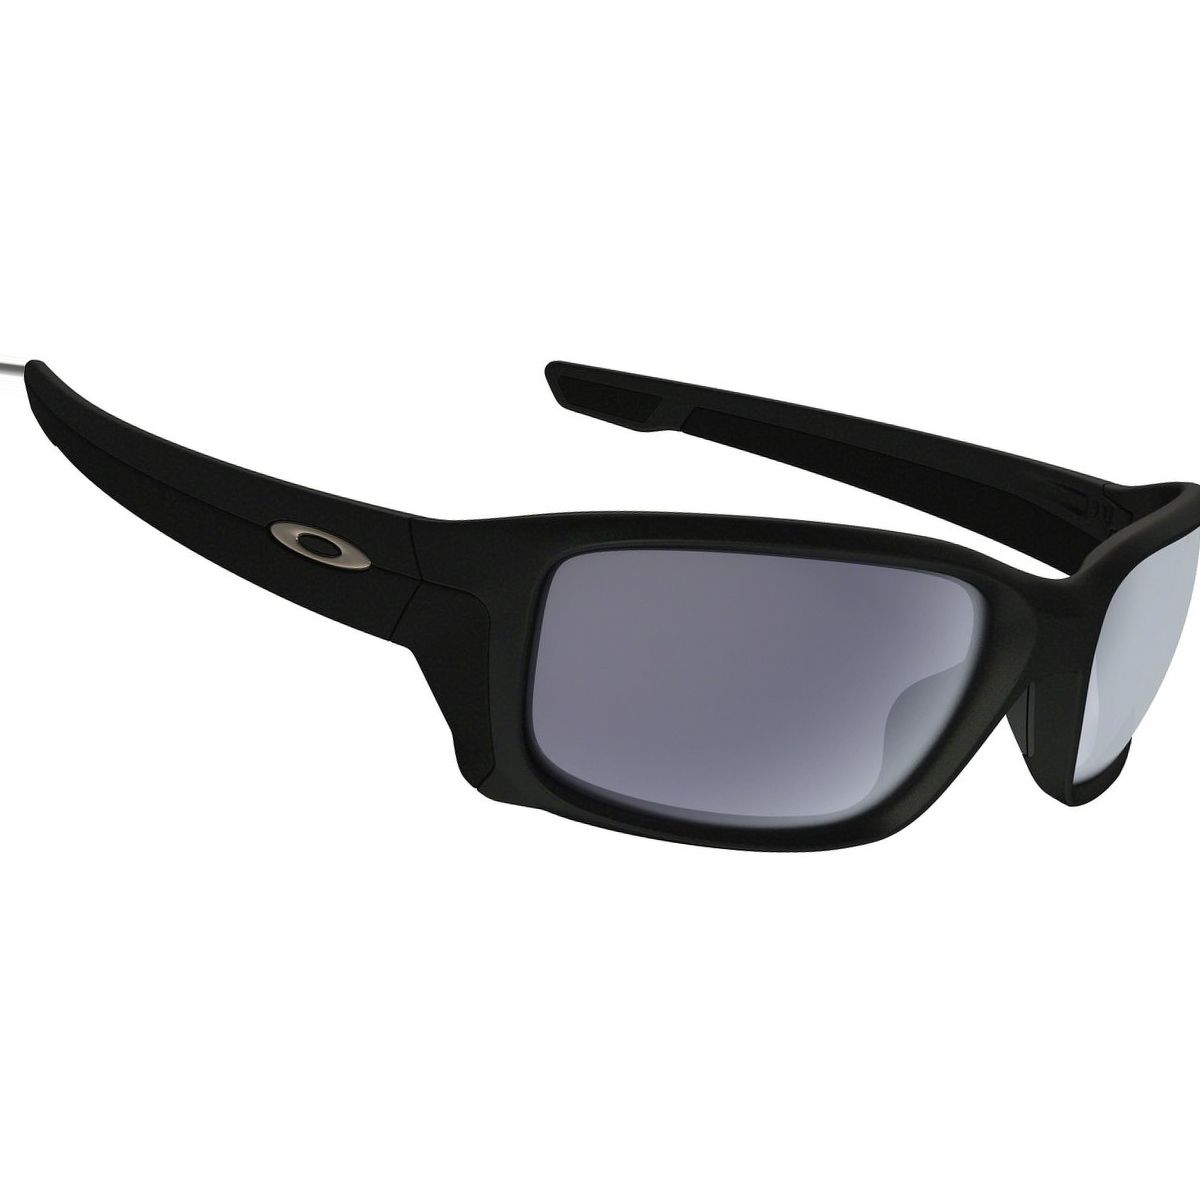 Oakley Straightlink Sunglasses - Men's